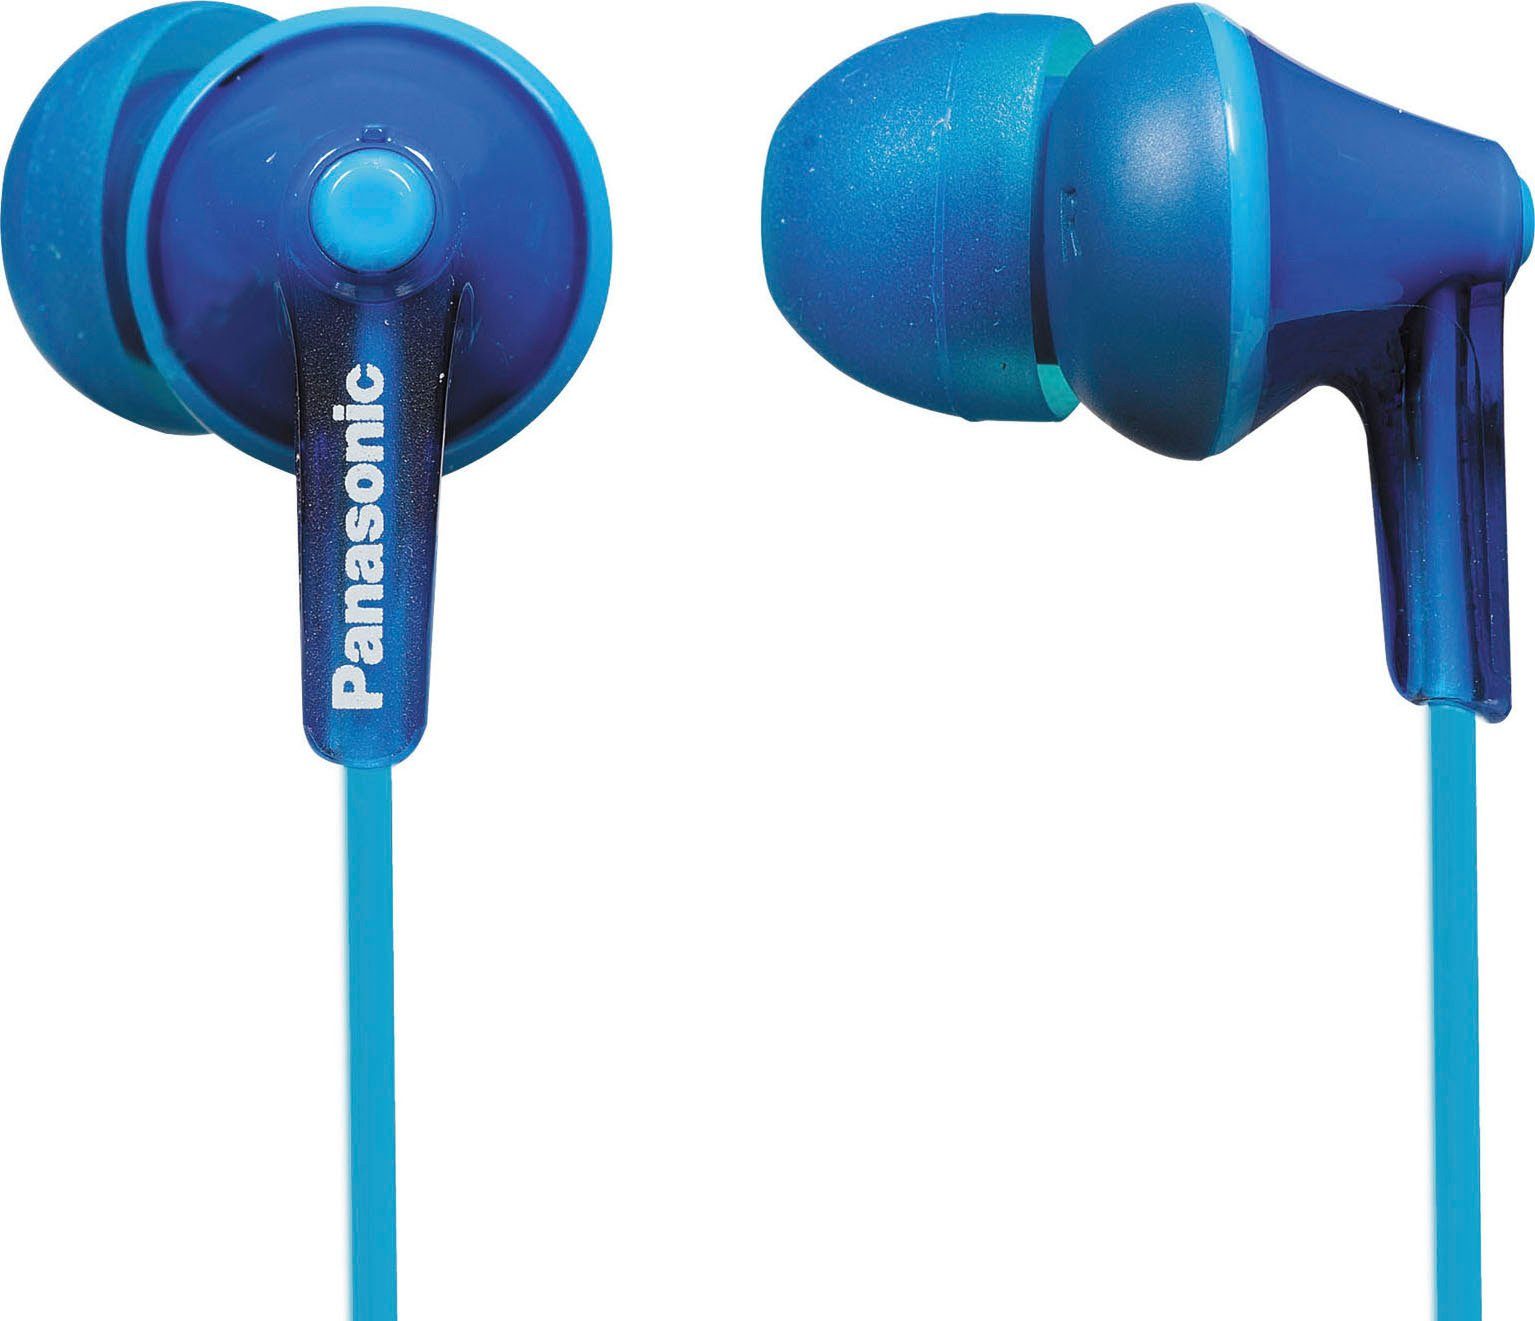 RP-HJE125 In-Ear-Kopfhörer blau Panasonic